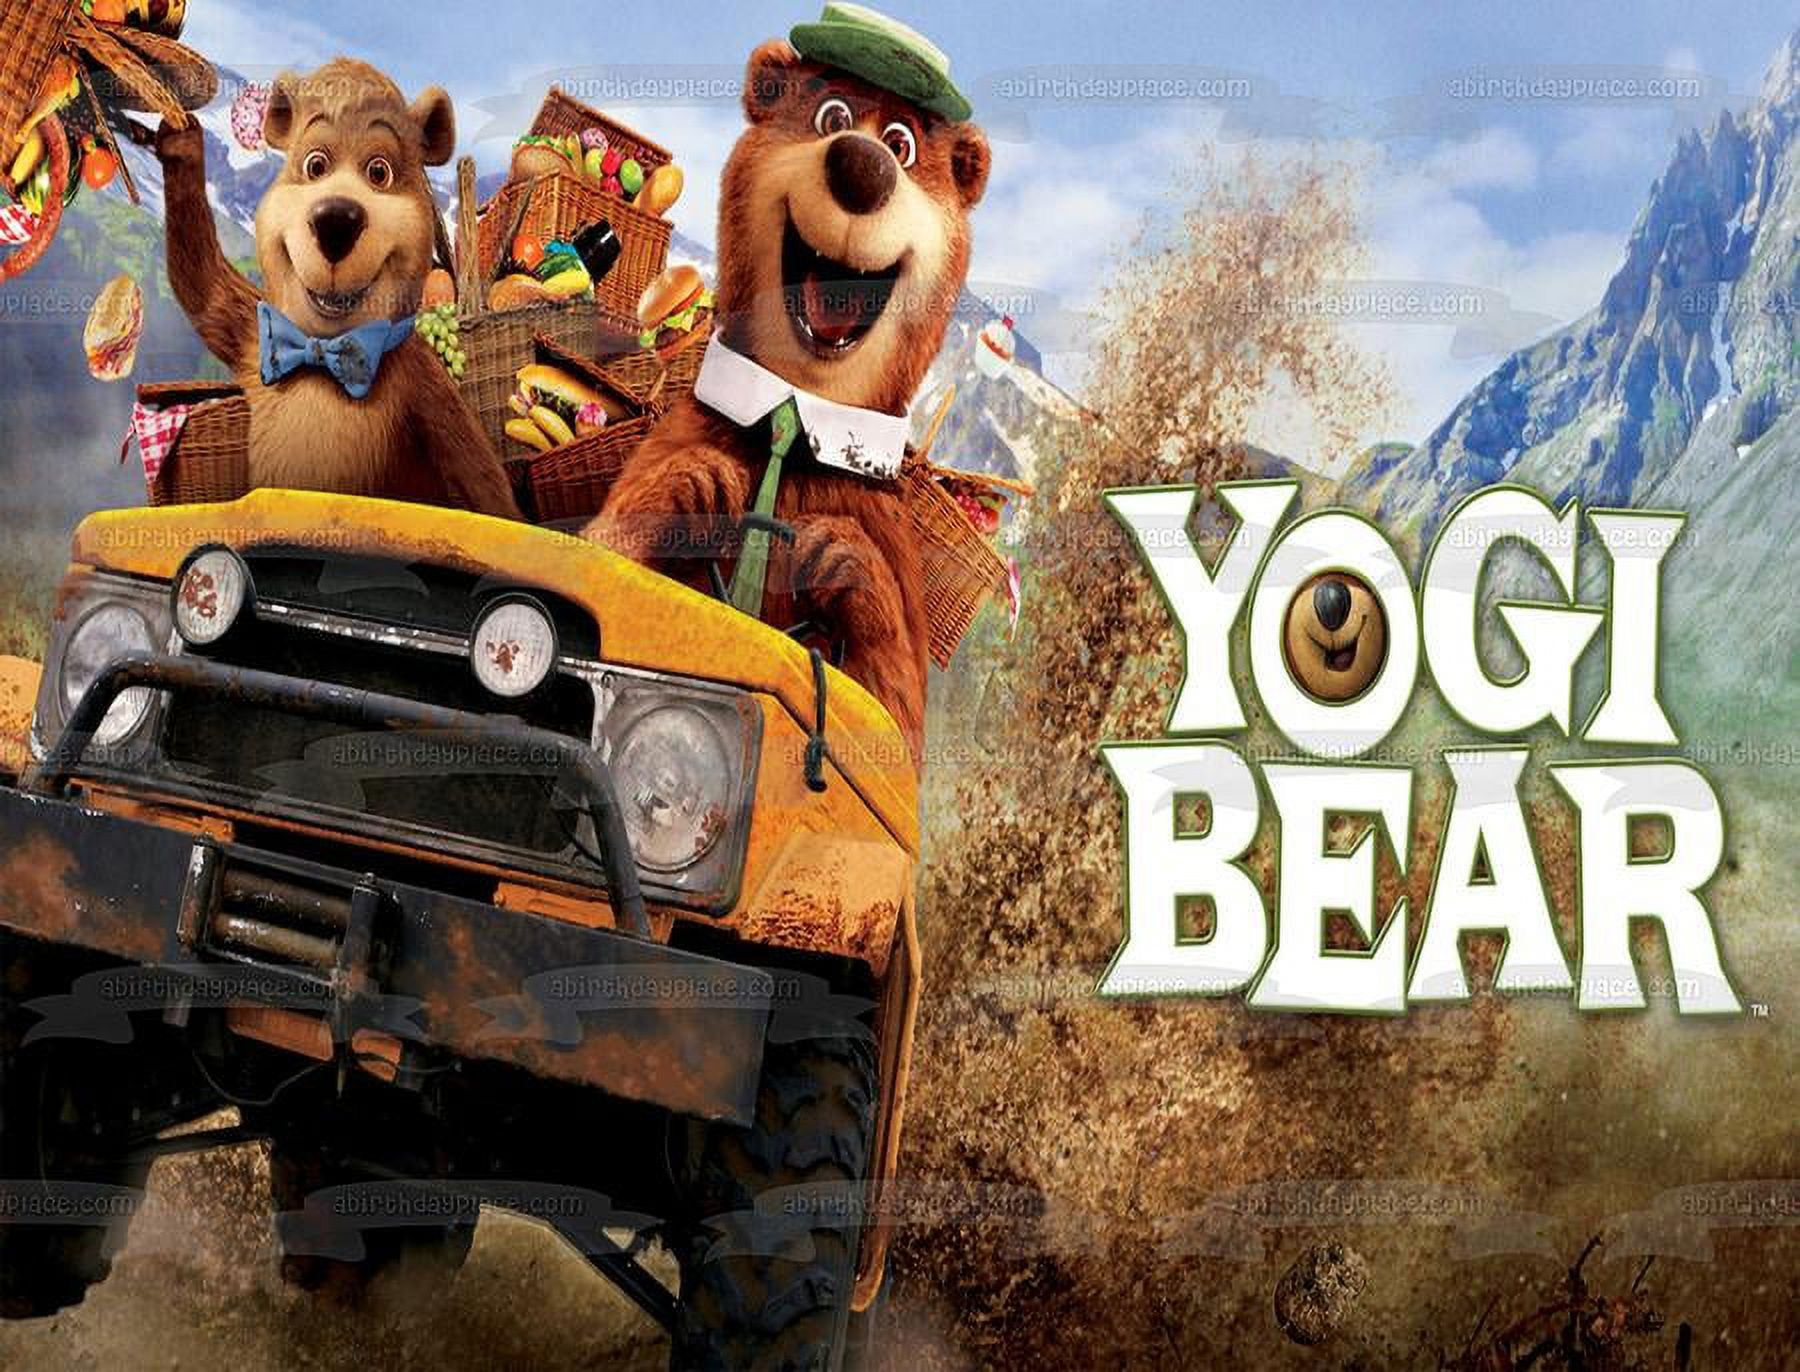 Yogi Bear Movie Boo Boo Jellystone Park Edible Cake Topper Image ABPID54650 - image 2 of 3